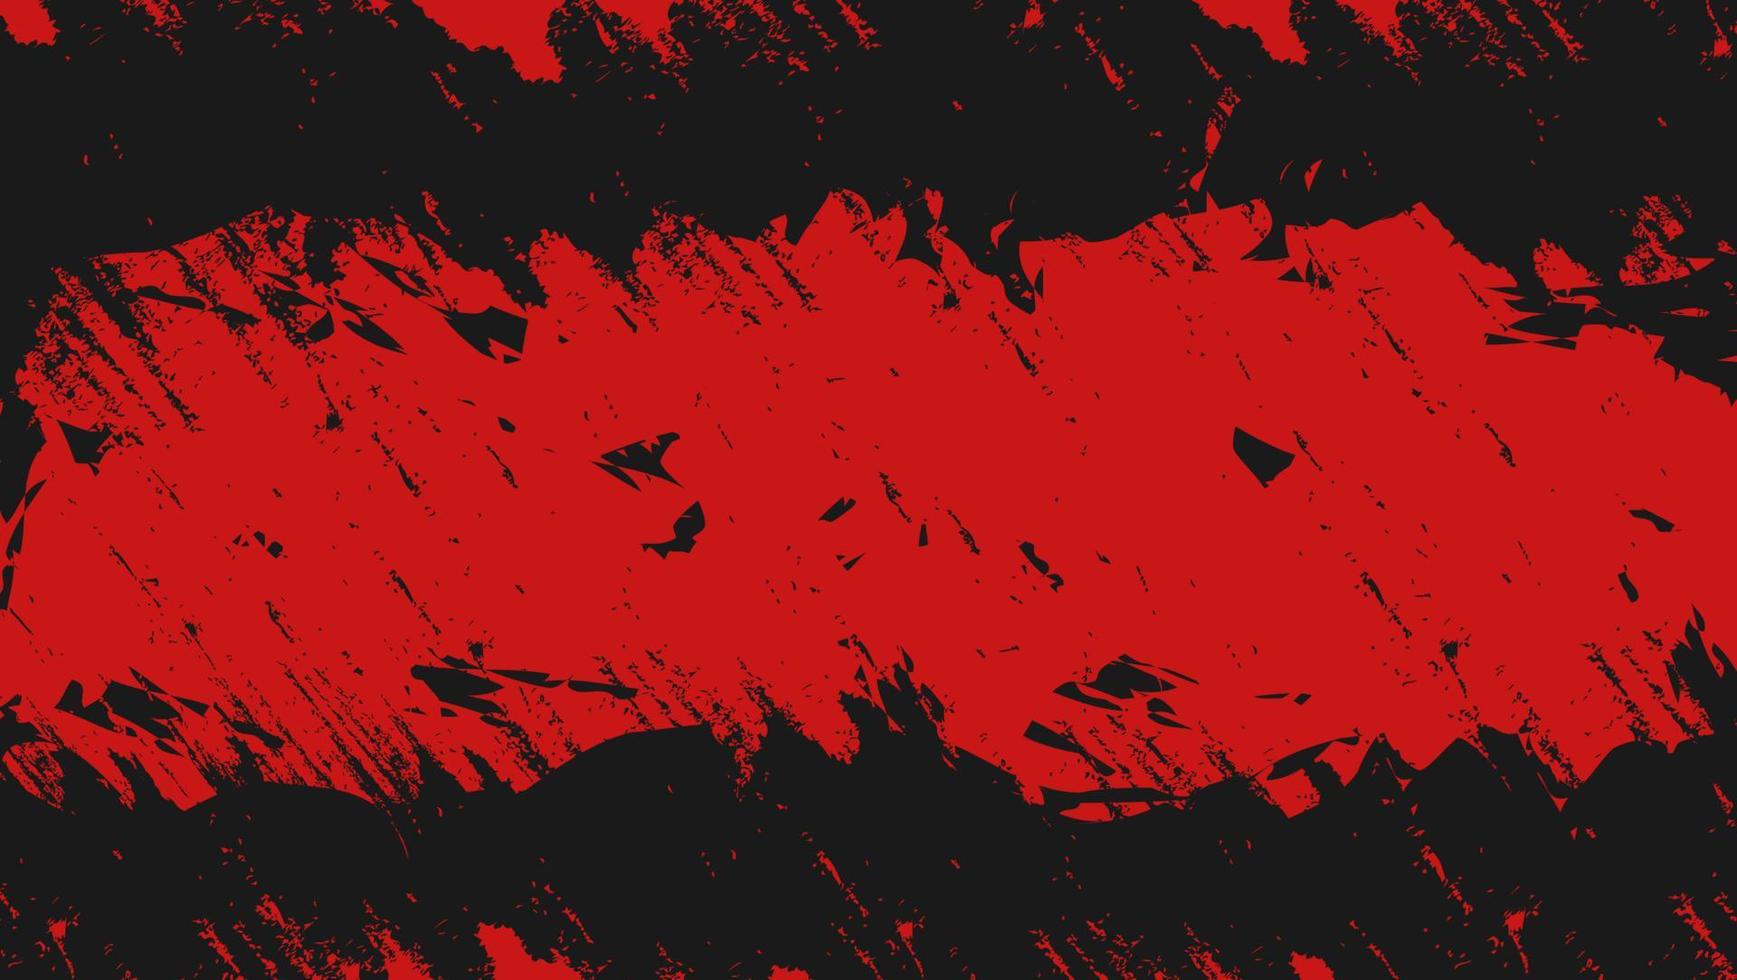 abstrakt kaos röd grunge textur design i svart bakgrund vektor